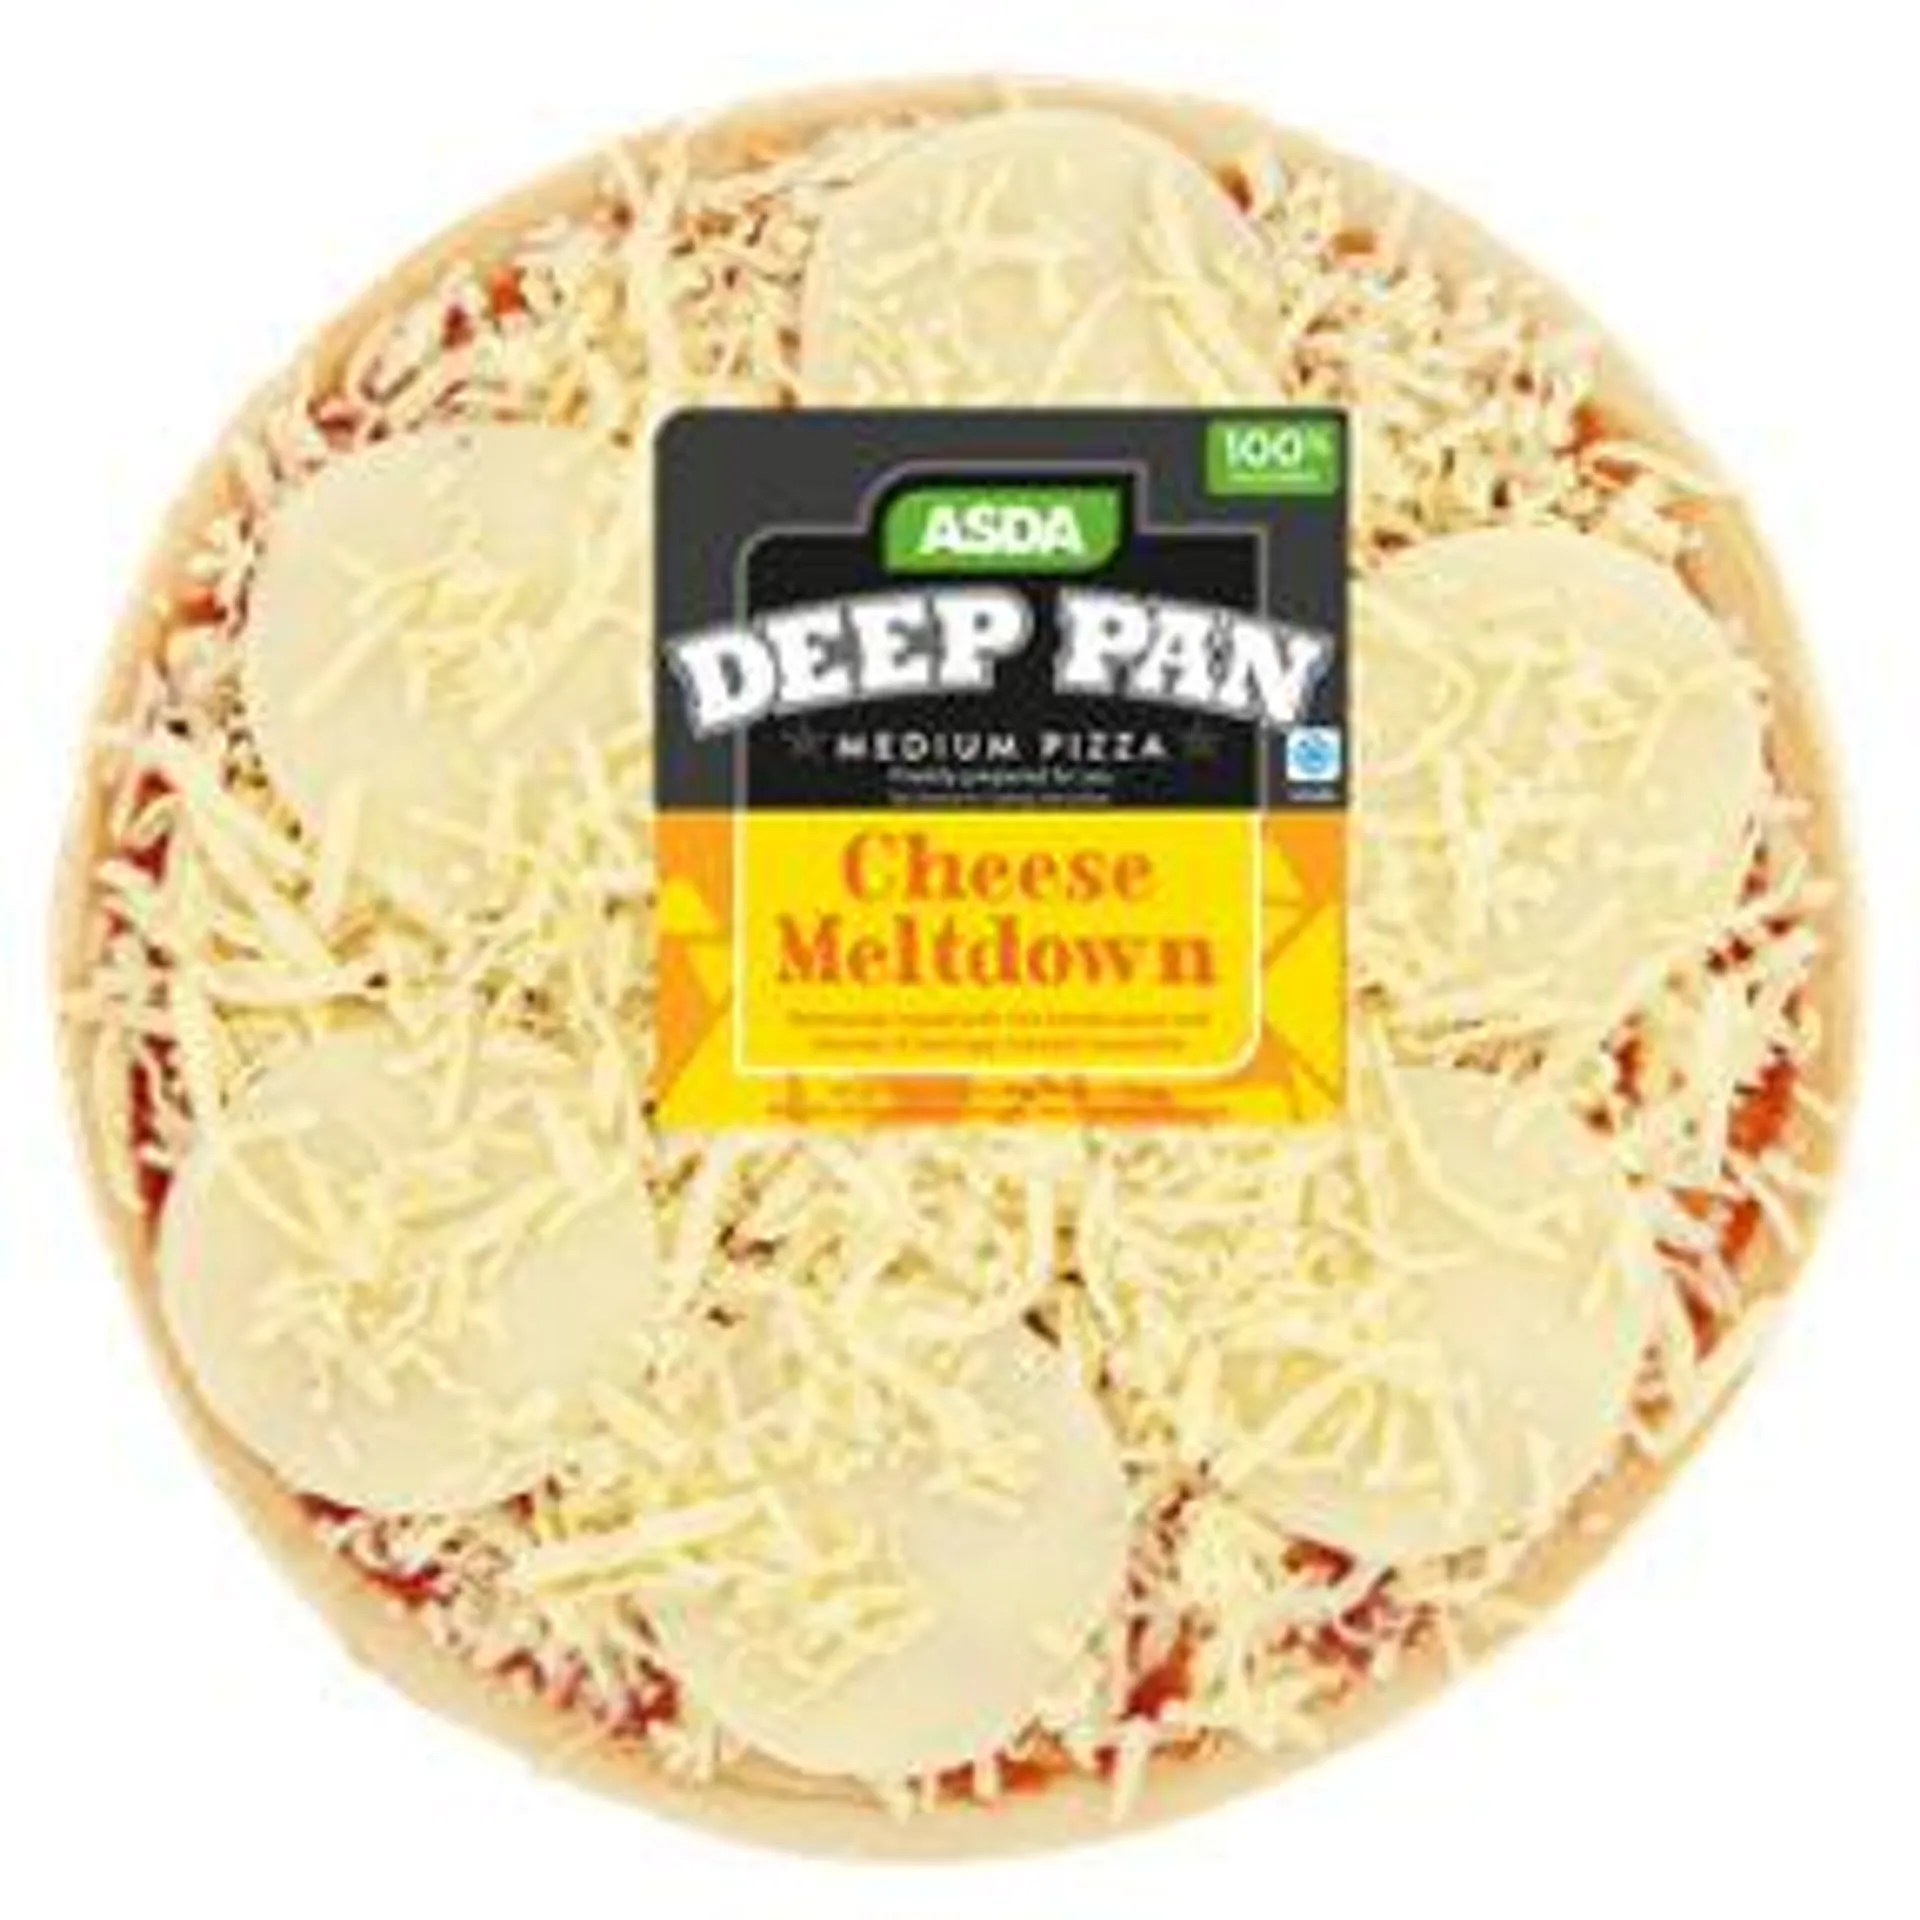 ASDA Medium Deep Pan Cheese Meltdown (Typically 423g)